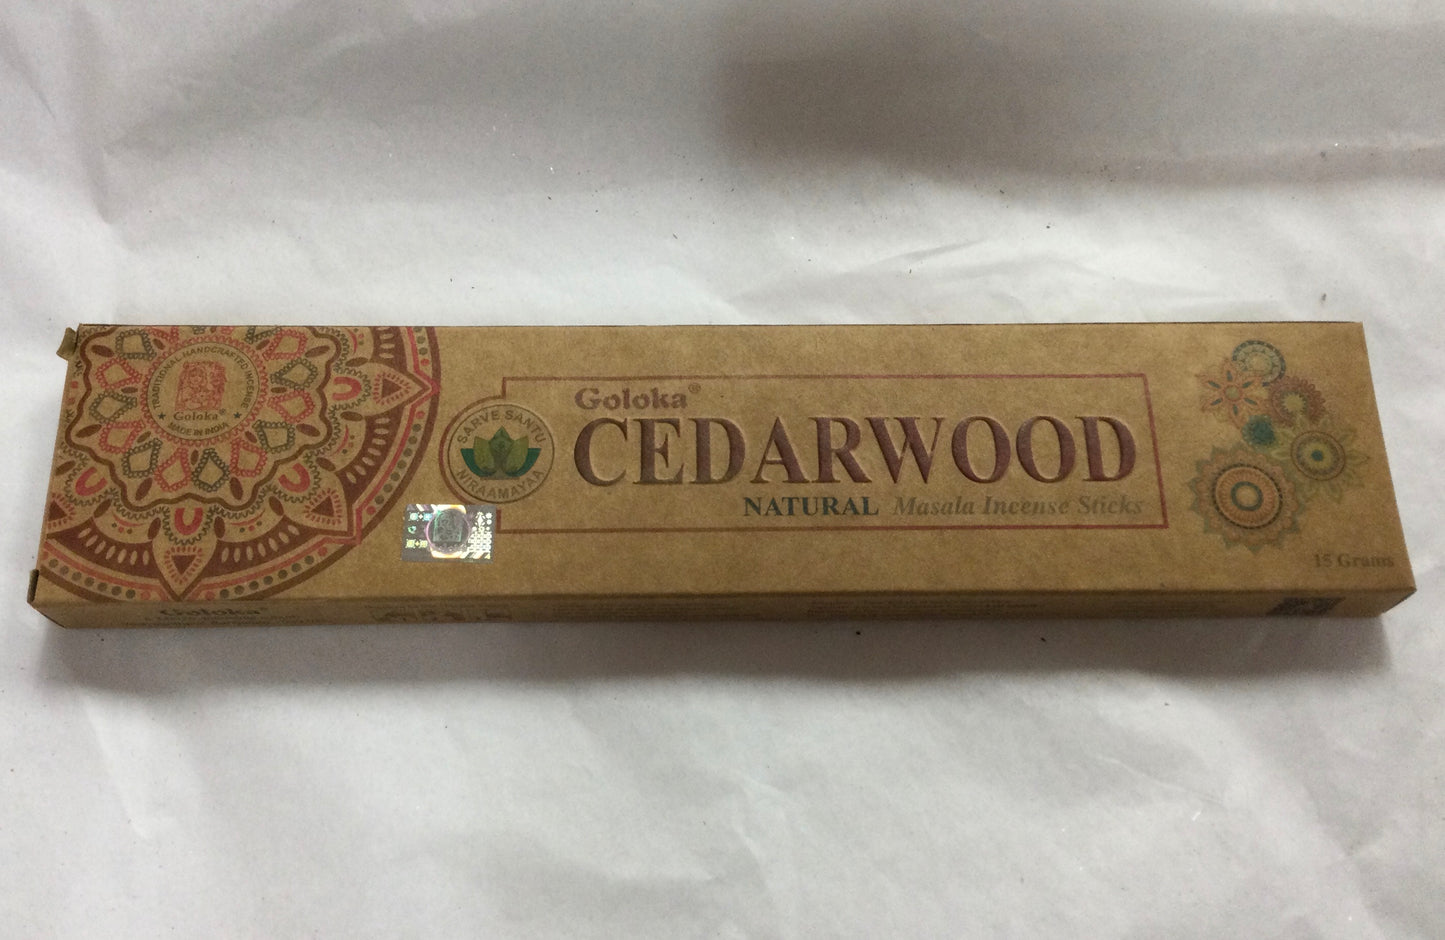 Goloka Cedarwood Incense